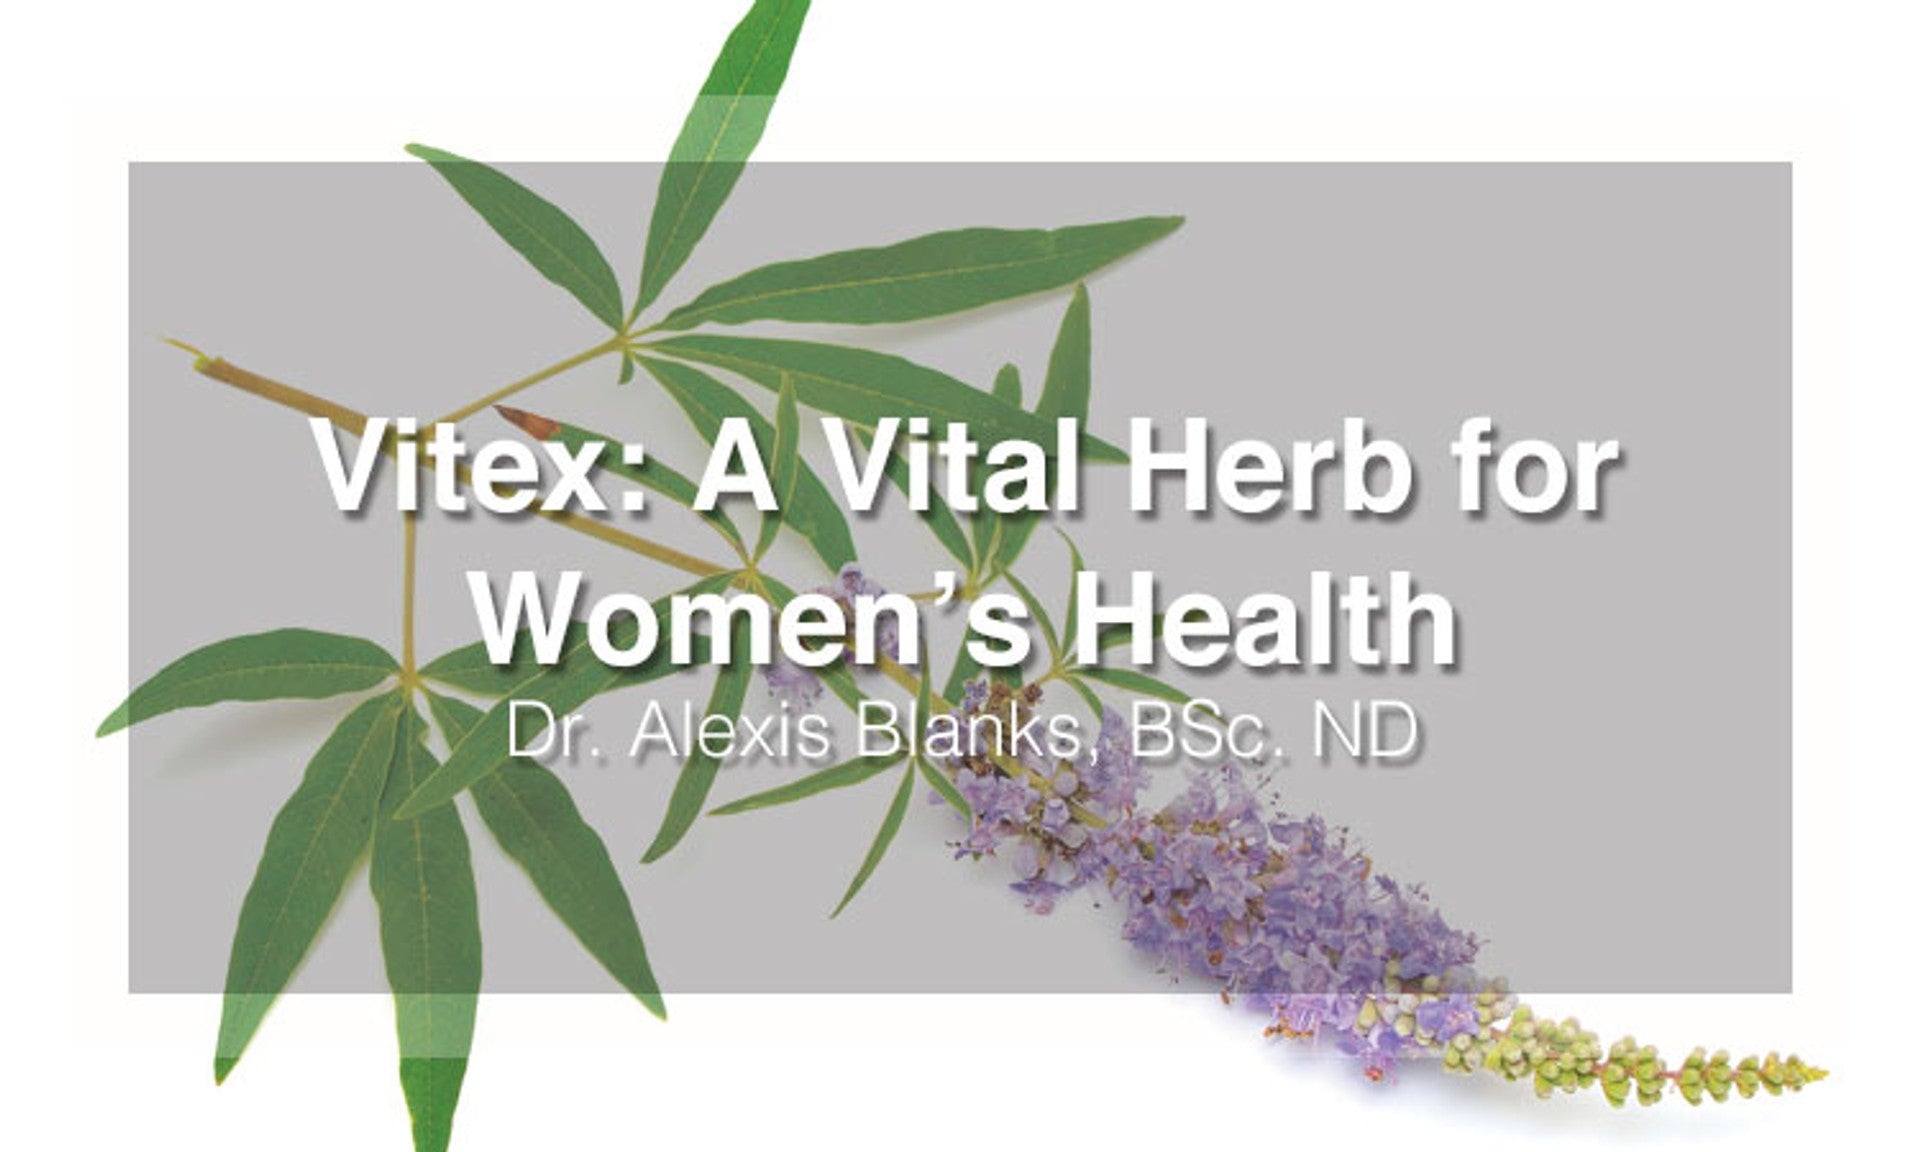 Vitex: A Vital Herb for Women's Health